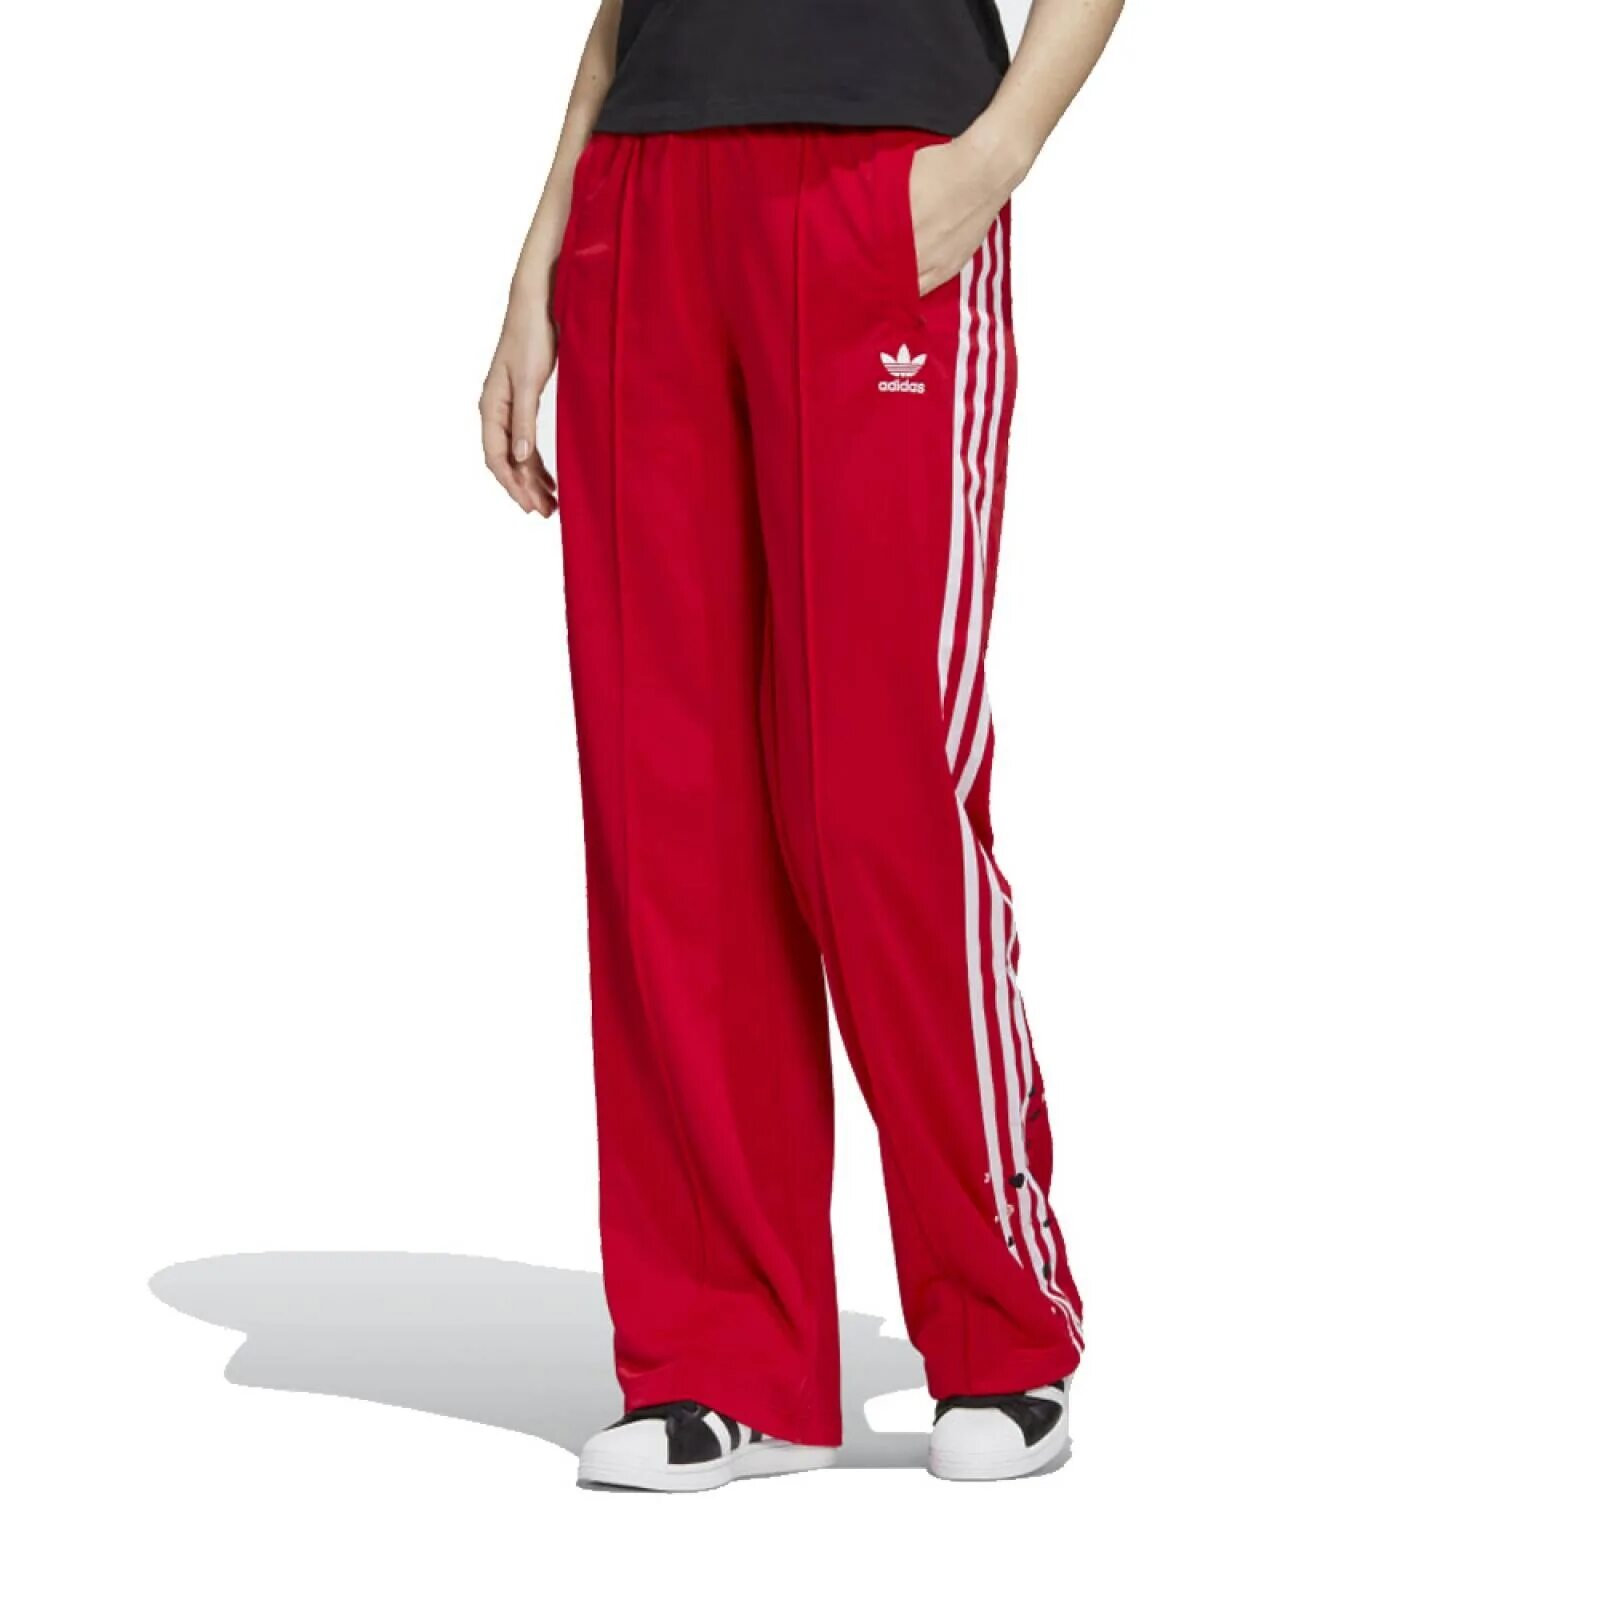 Красные штаны адидас. Adidas track Pants Valentines Day. Adidas Originals красные брюки. Штаны адидас клеш.